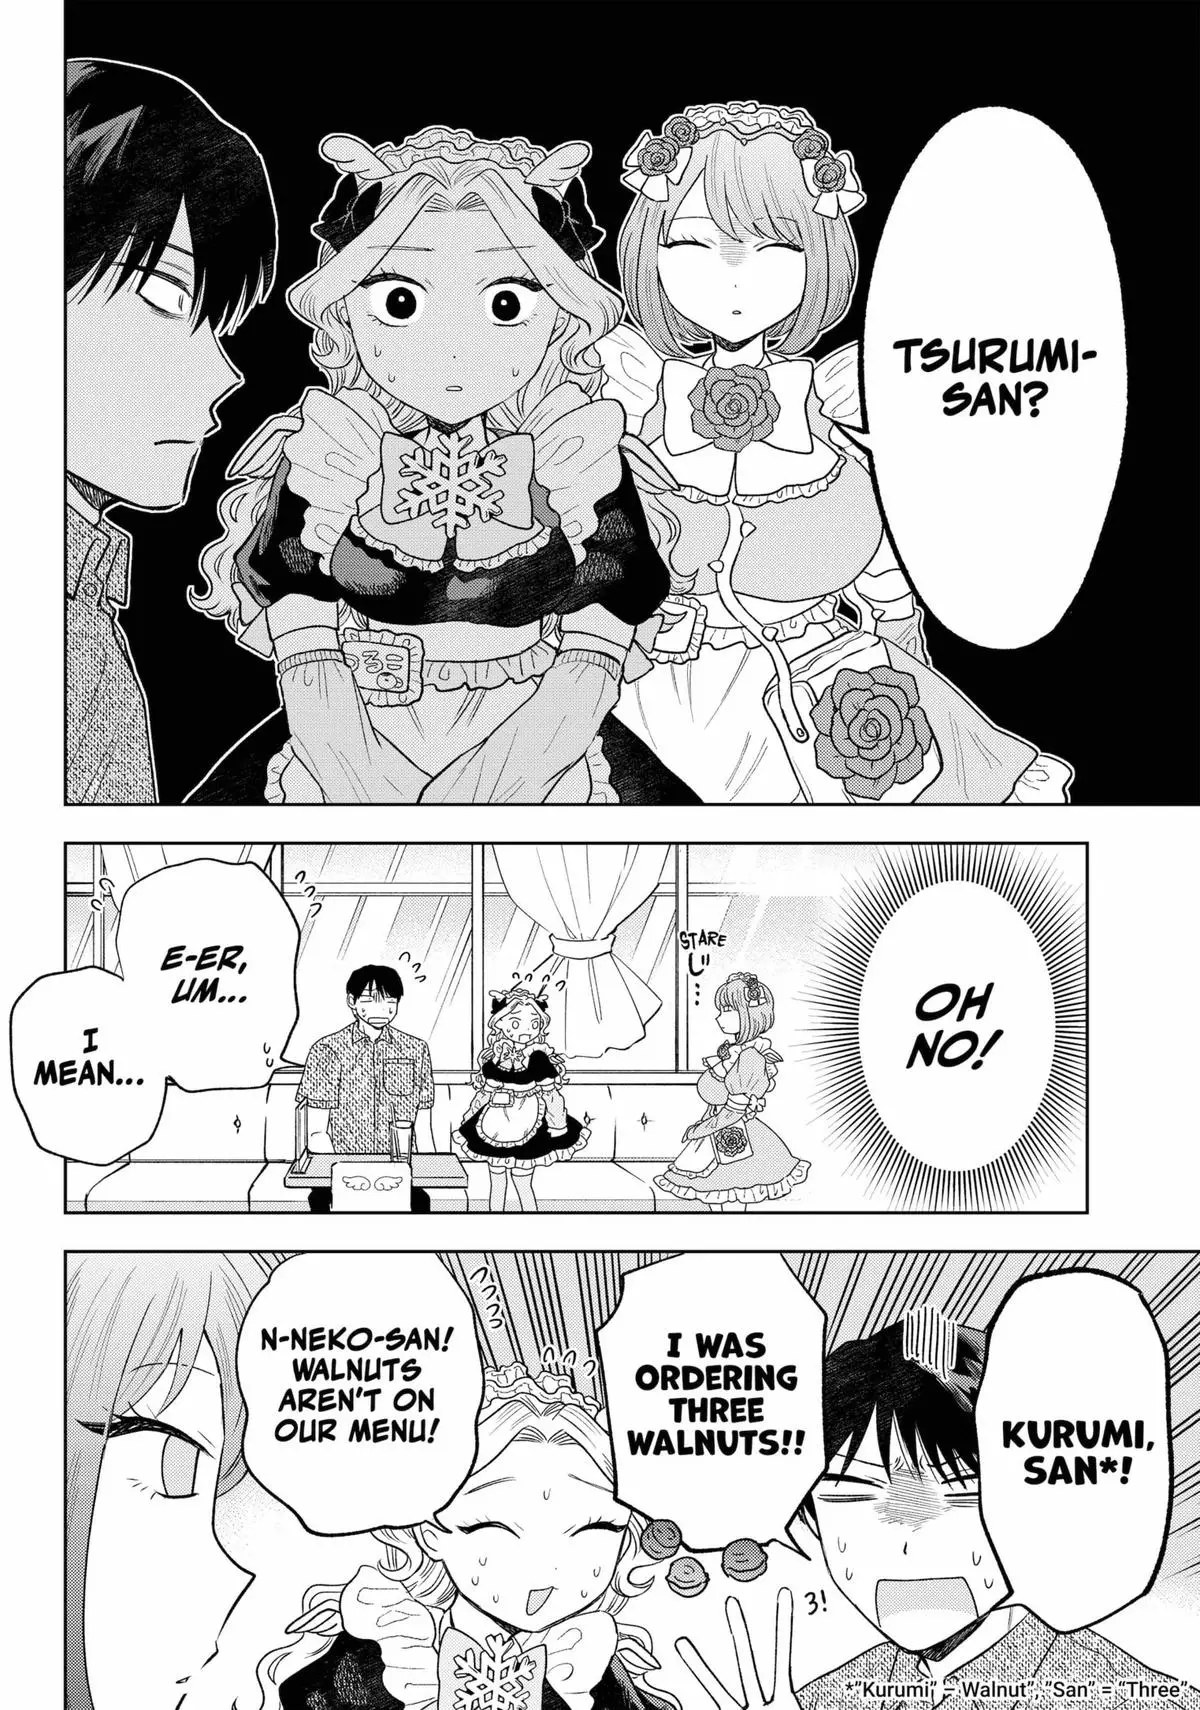 Tsuruko Returns The Favor - 12 page 18-5a9266ac